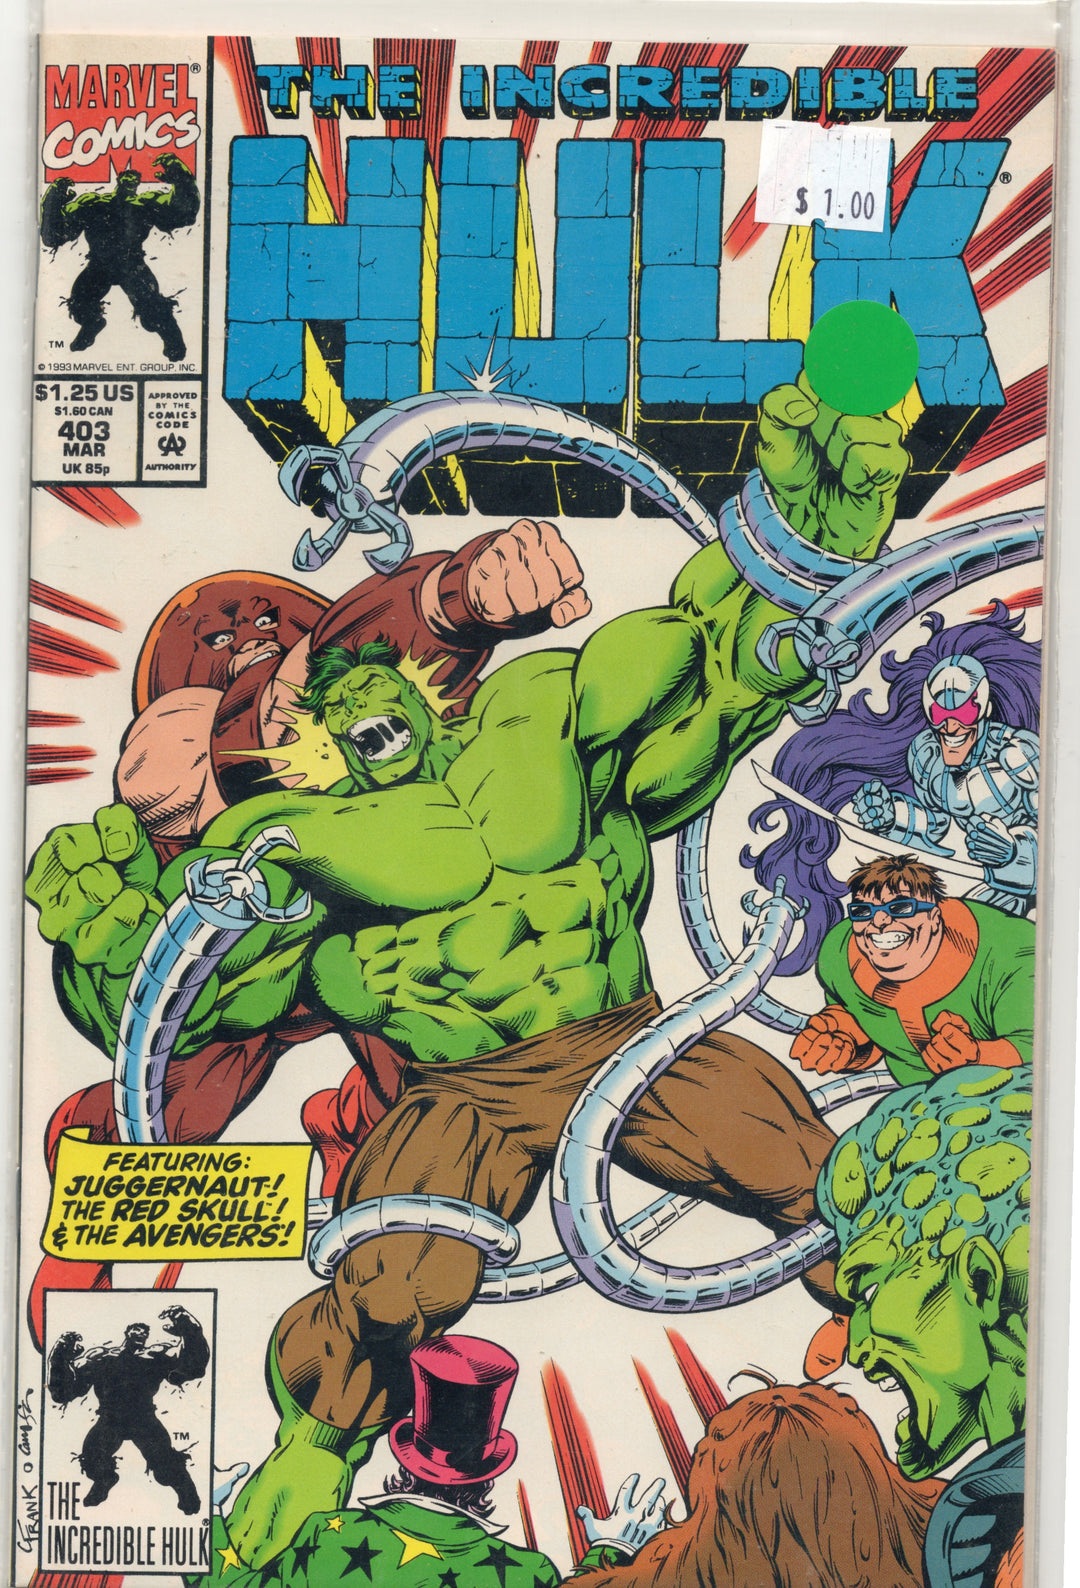 The Incredible Hulk #403